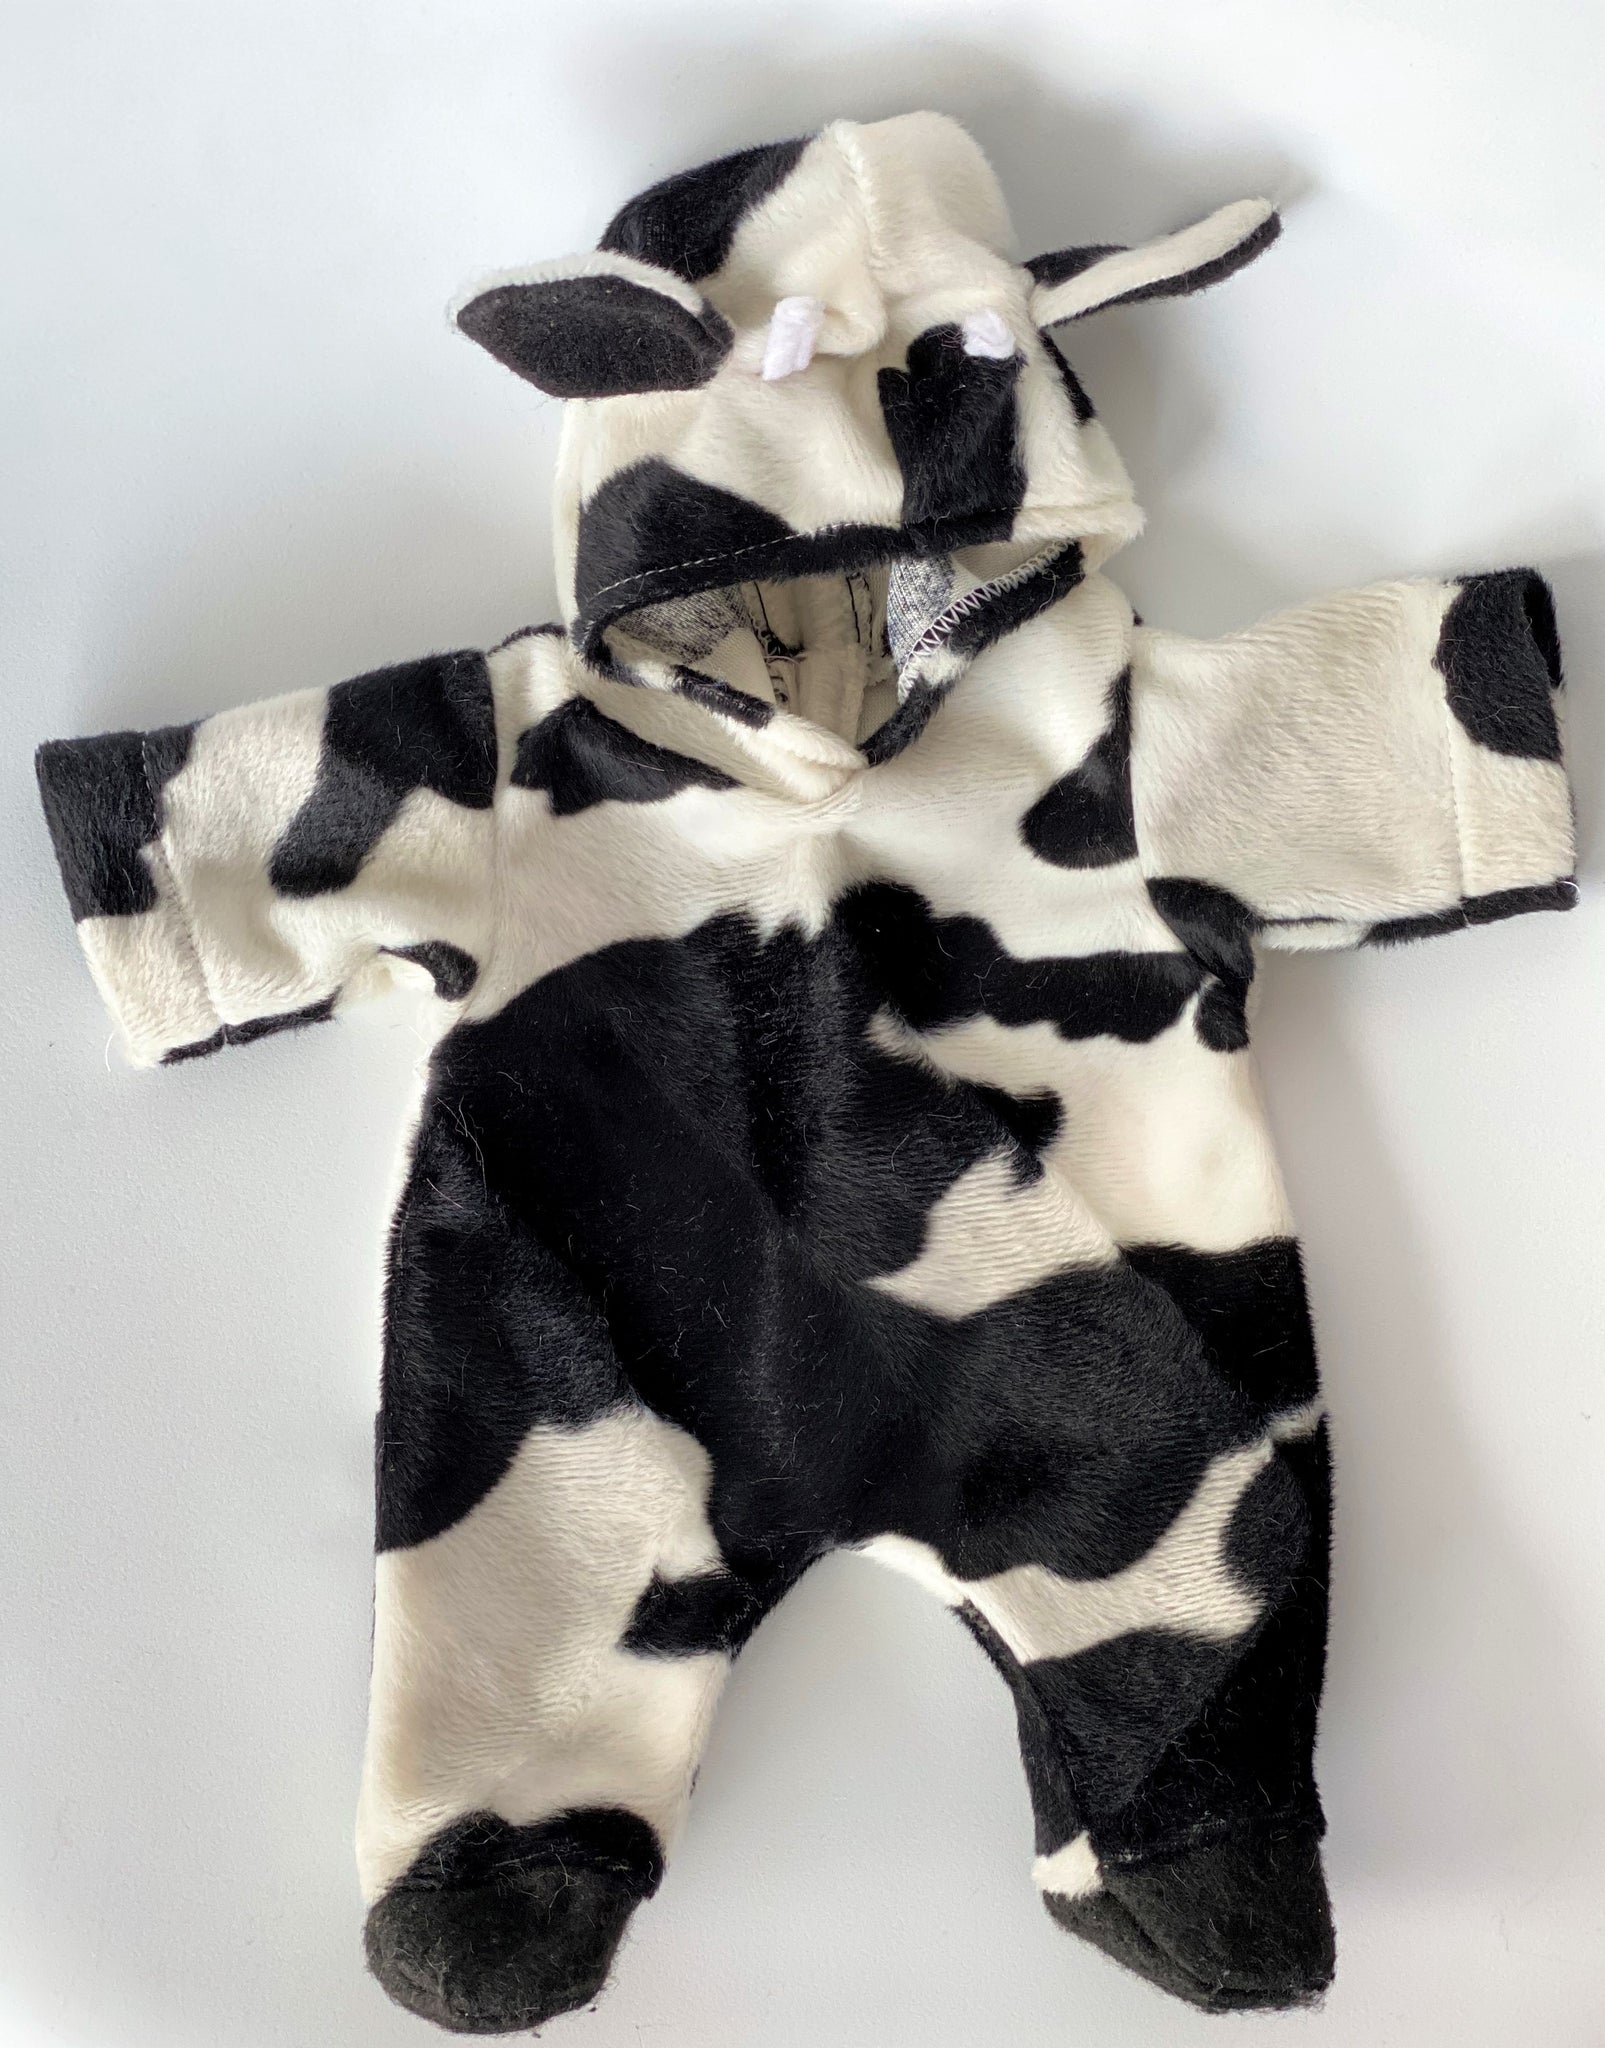 Disfraz Vaca 9 meses – The Funursery Baby Care